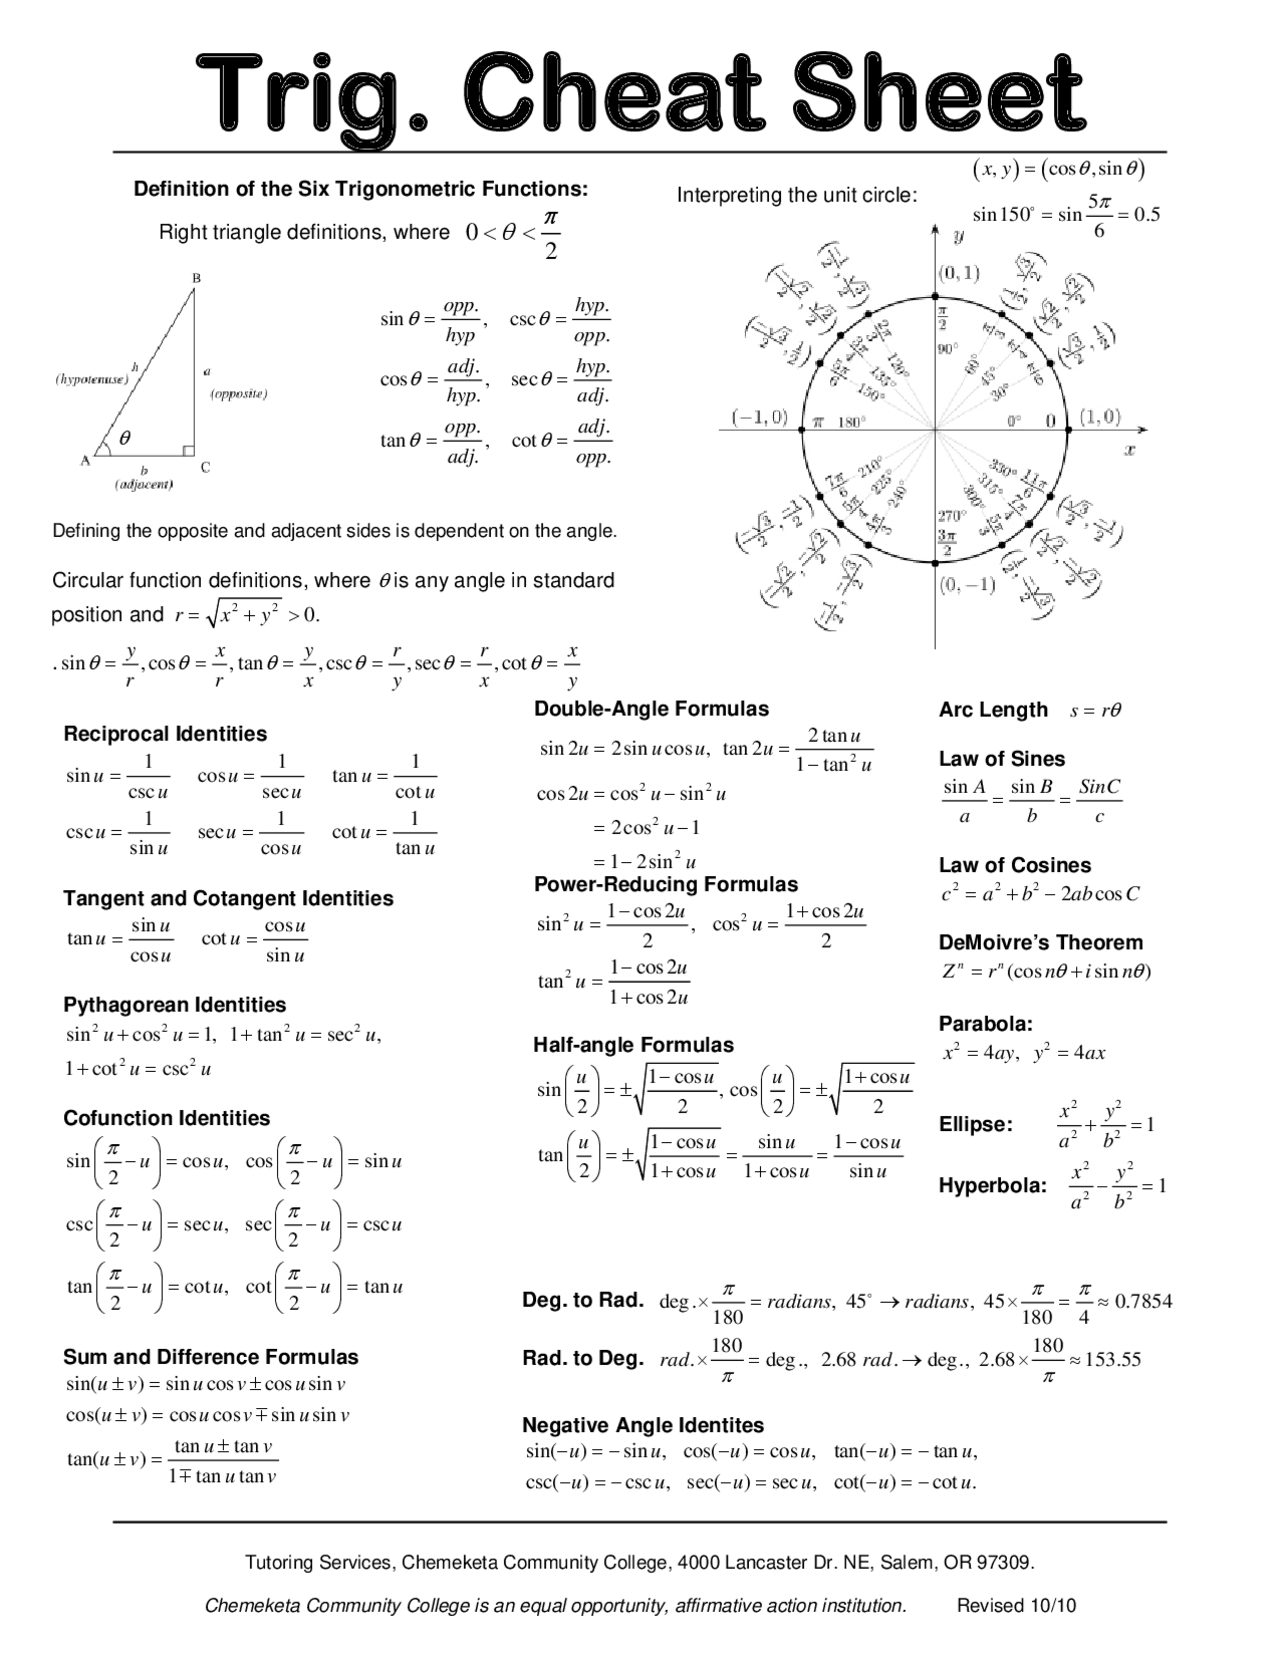 trigonometry-cheat-sheet